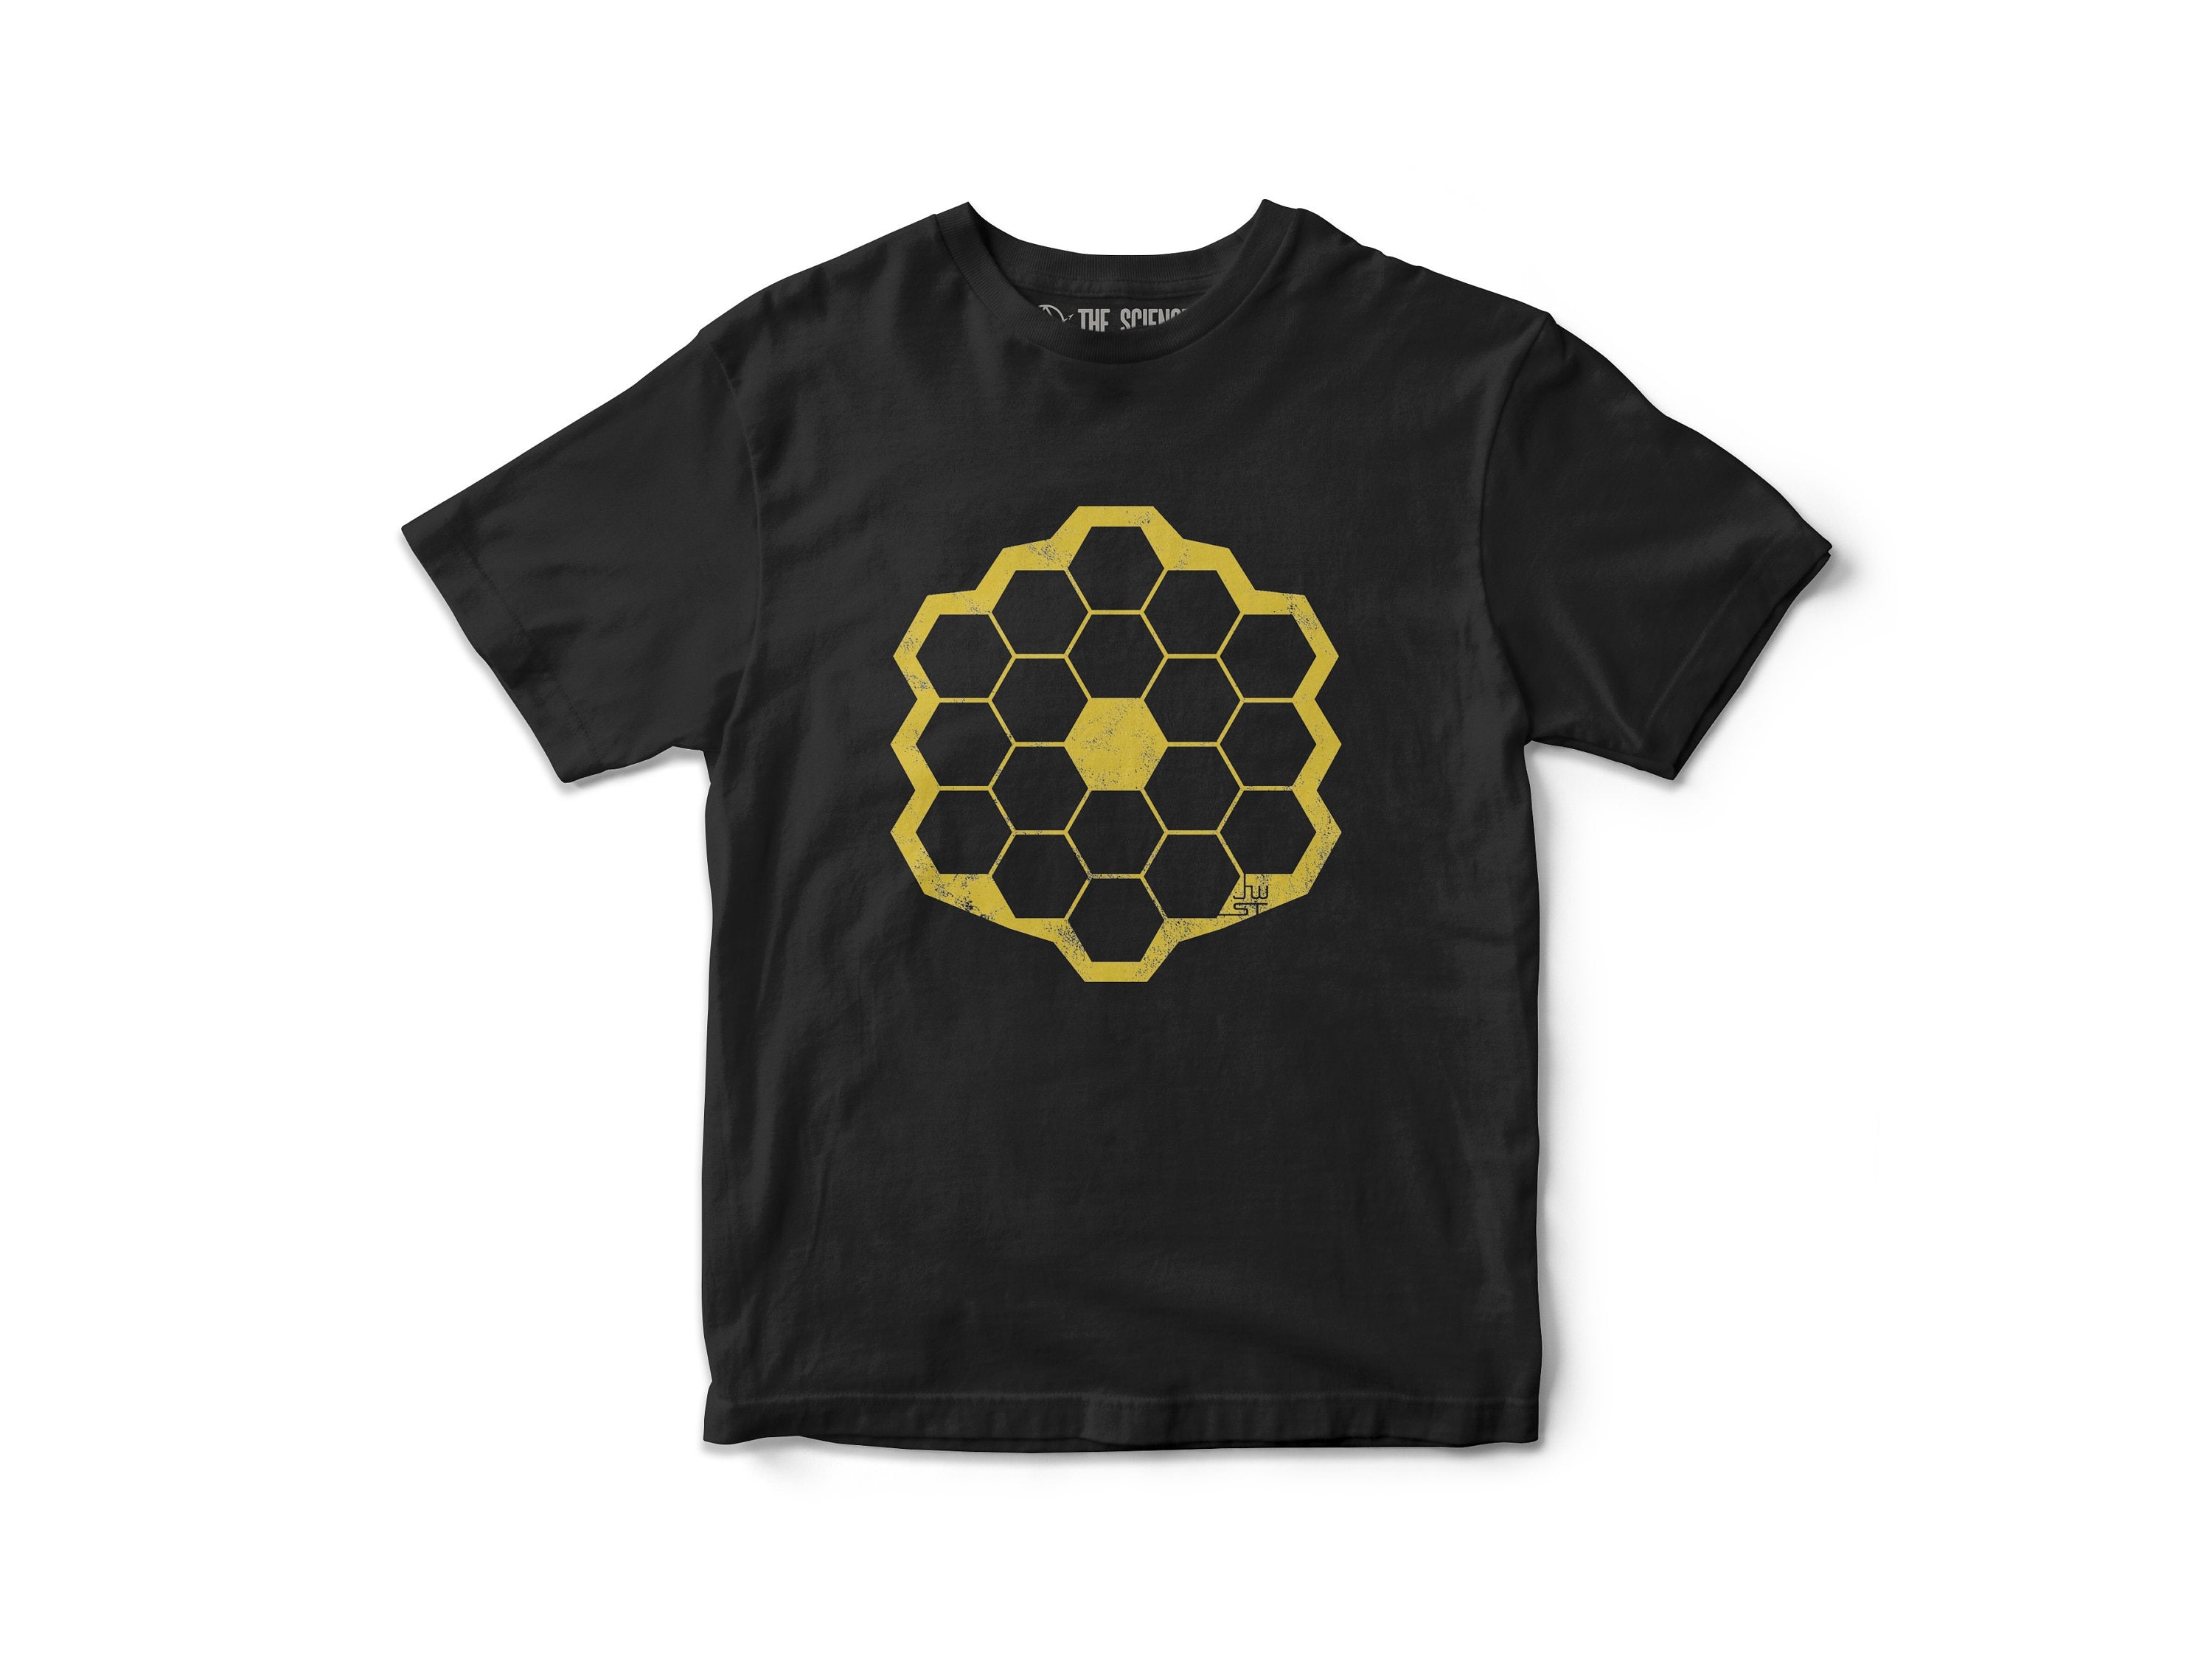 James Webb Telescope T-Shirt - Minimalist Space / Astronomy Tee - NASA / Aerospace Gift